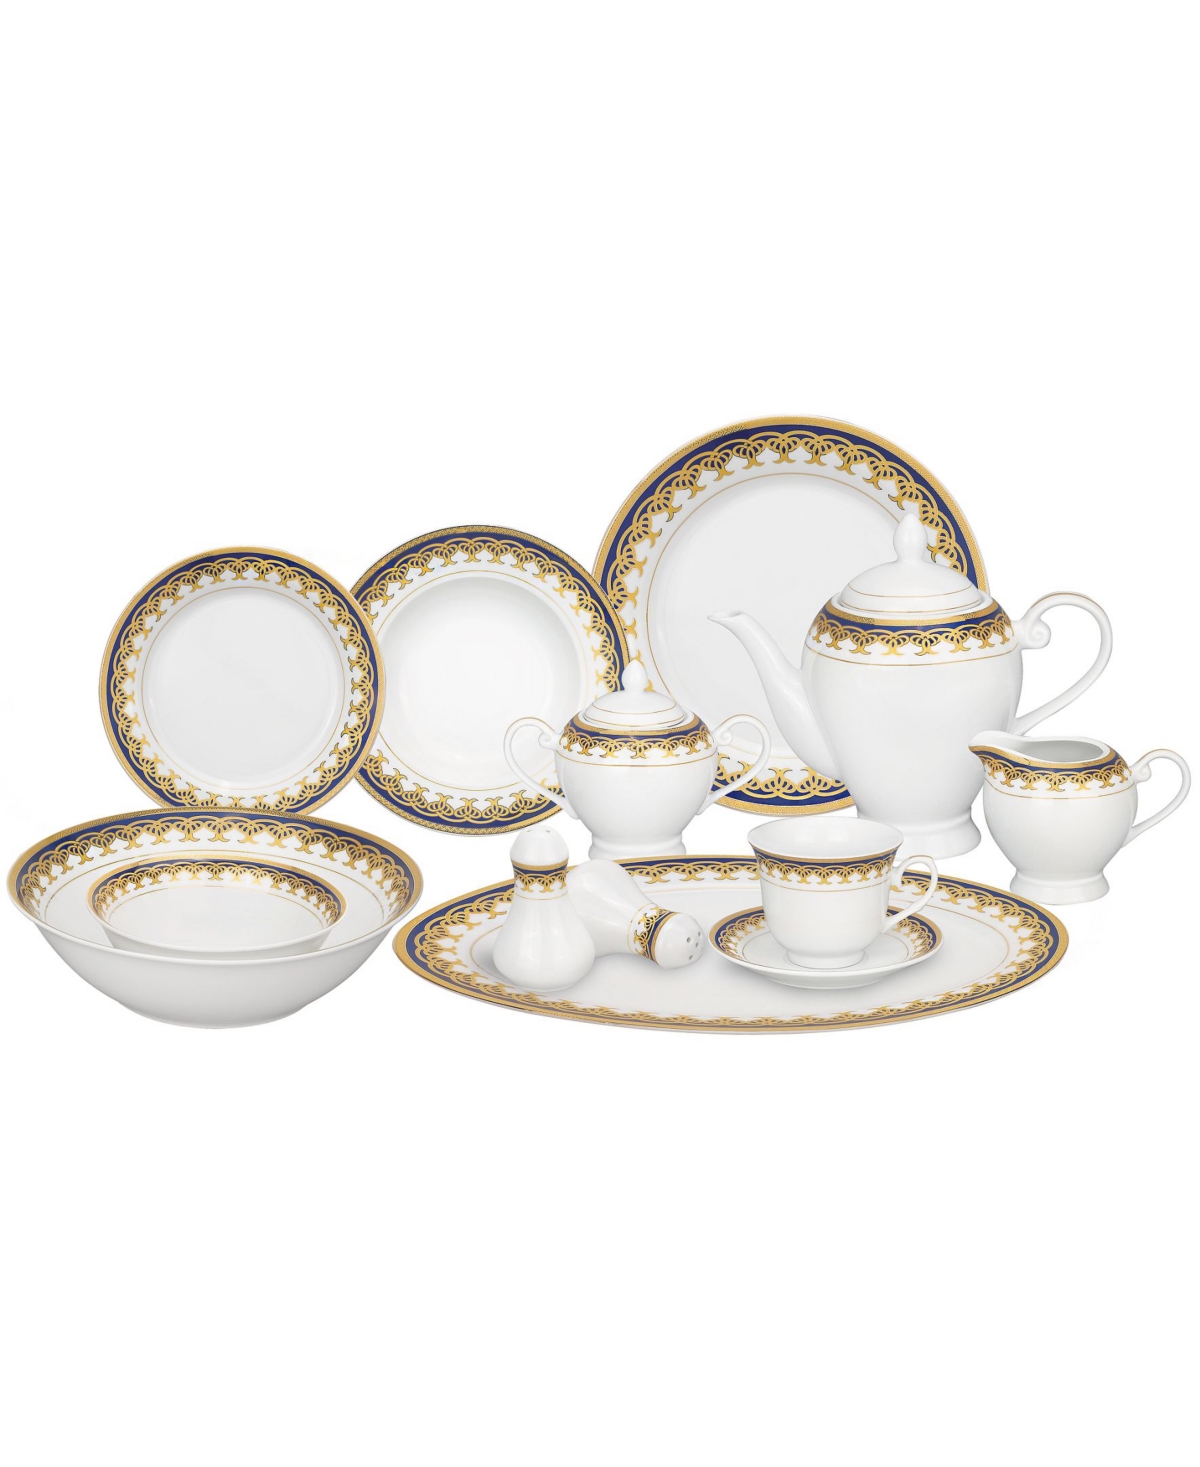 Lorren Home Trends 57 Piece Porcelain Dinnerware Set, Service For 8 In Blue